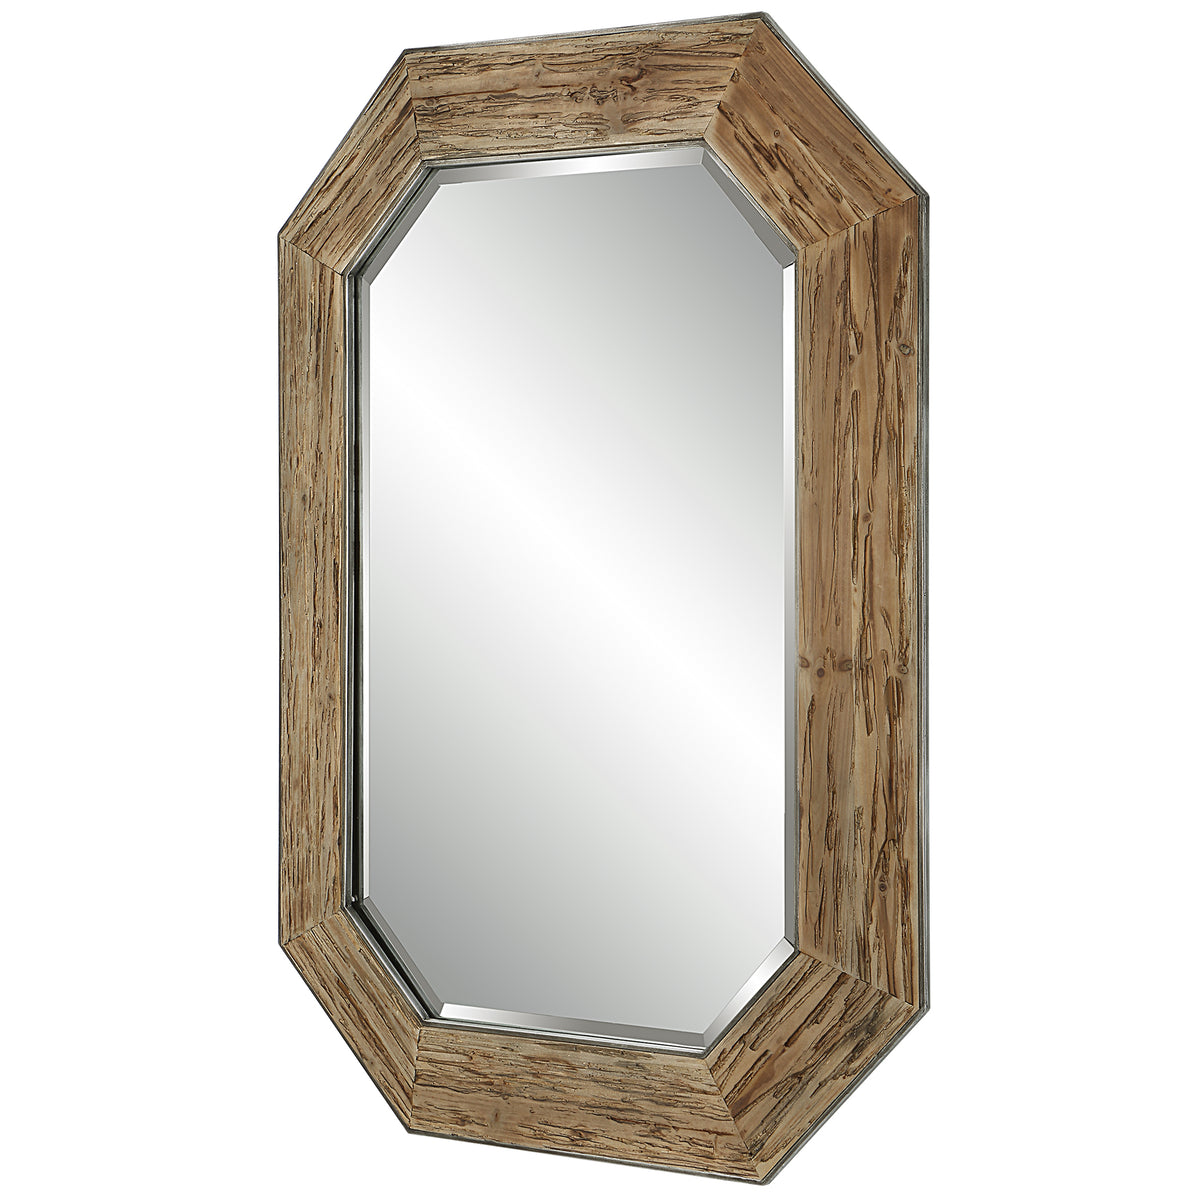 Uttermost Siringo Rustic Octagonal Mirror